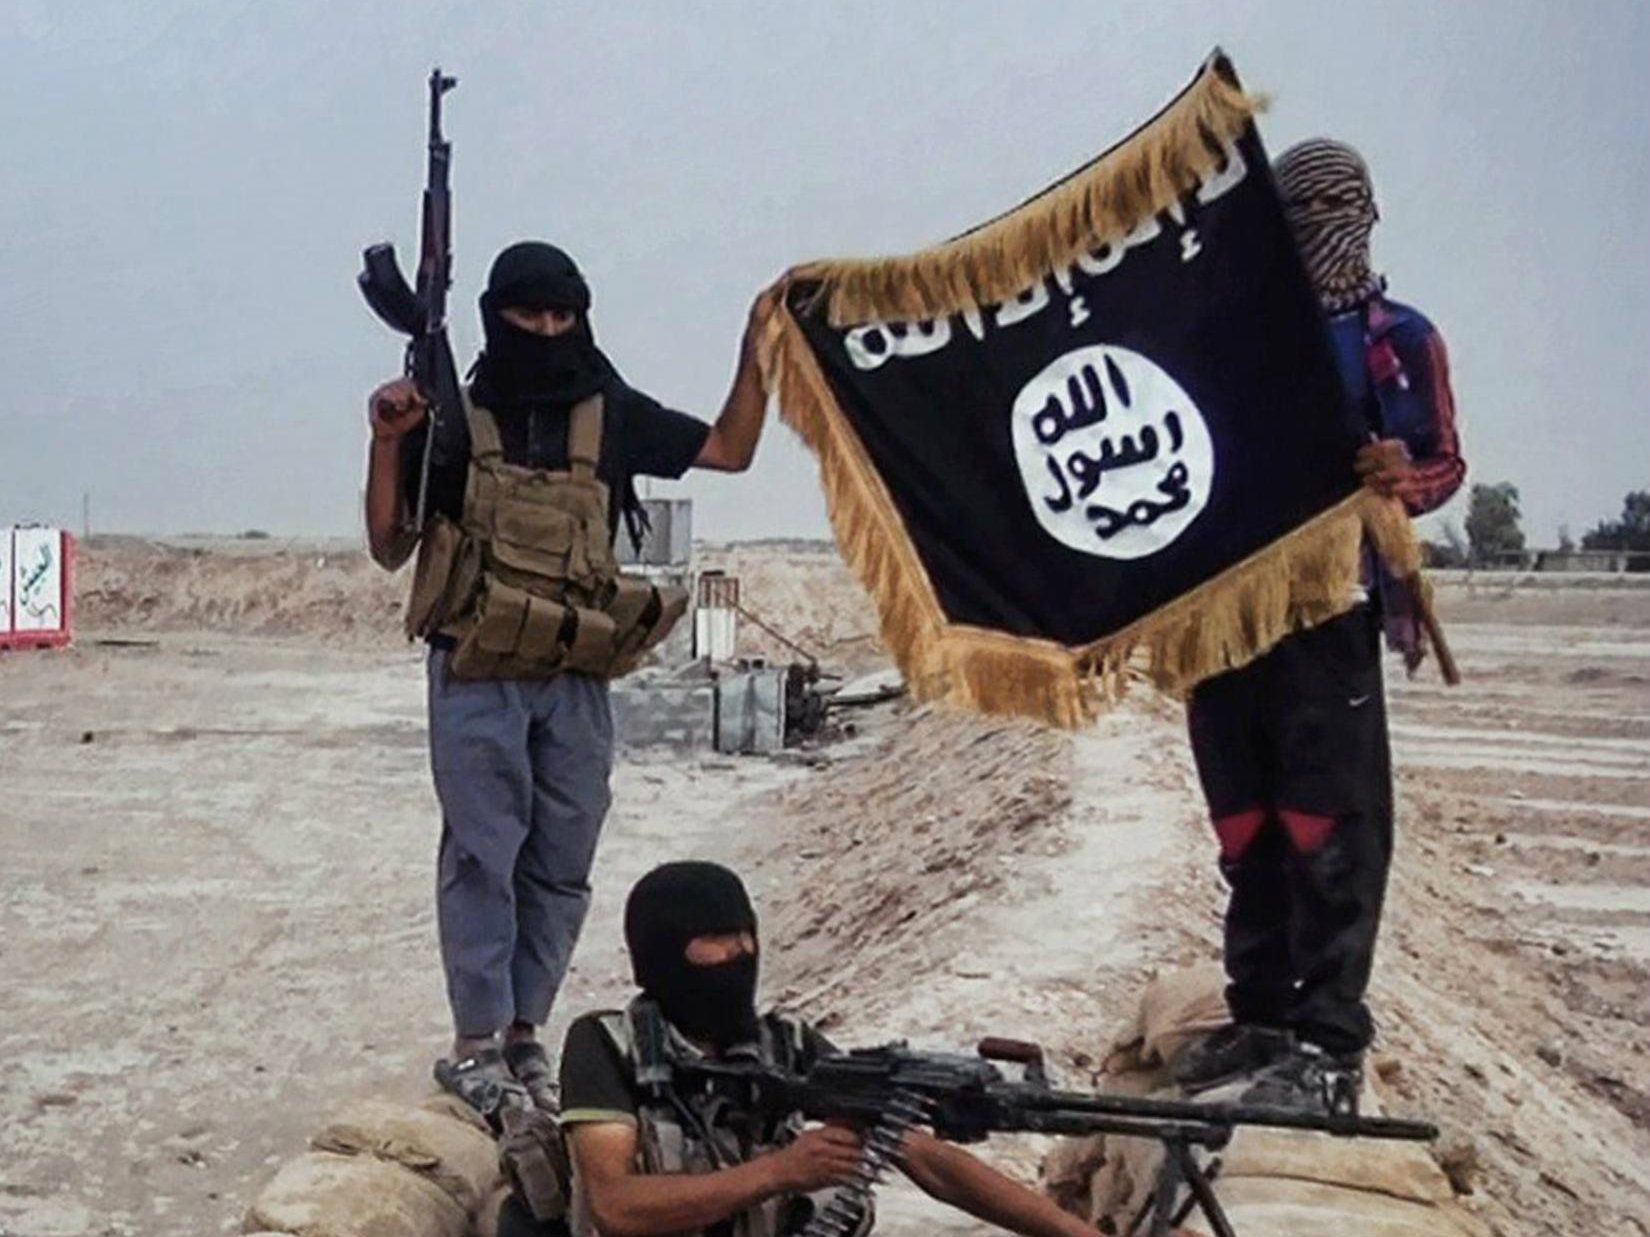 Ban ISIS Symbols: Austrian Minister